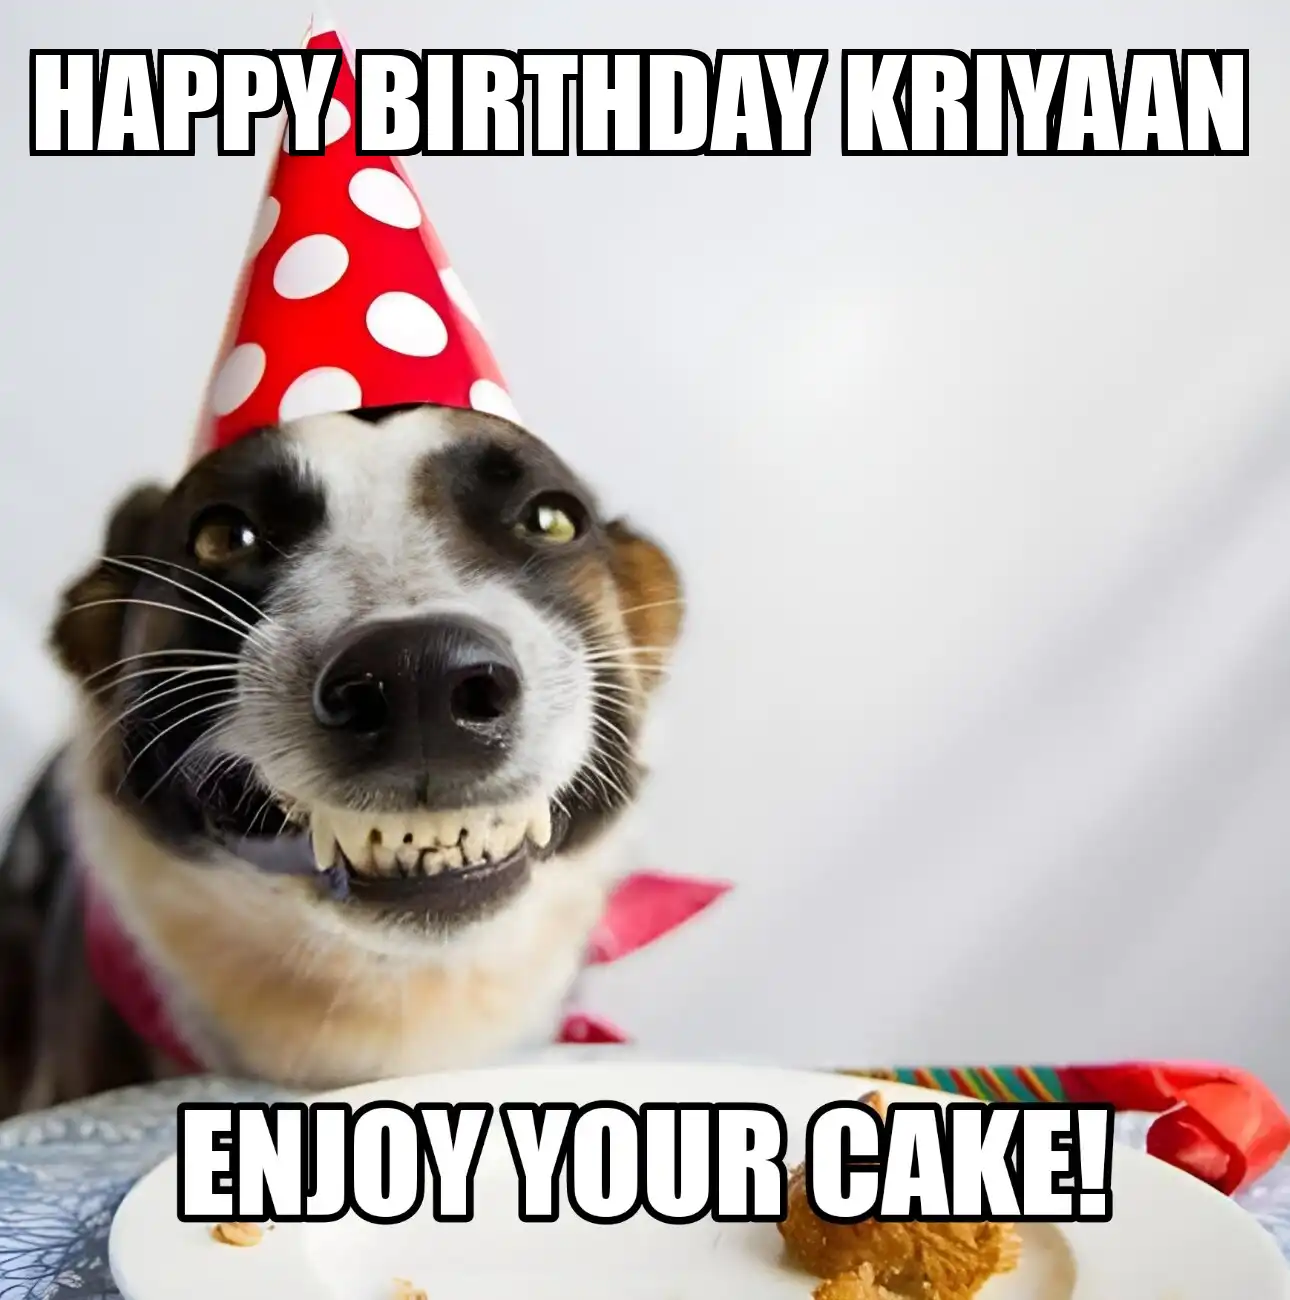 Happy Birthday Kriyaan Enjoy Your Cake Dog Meme